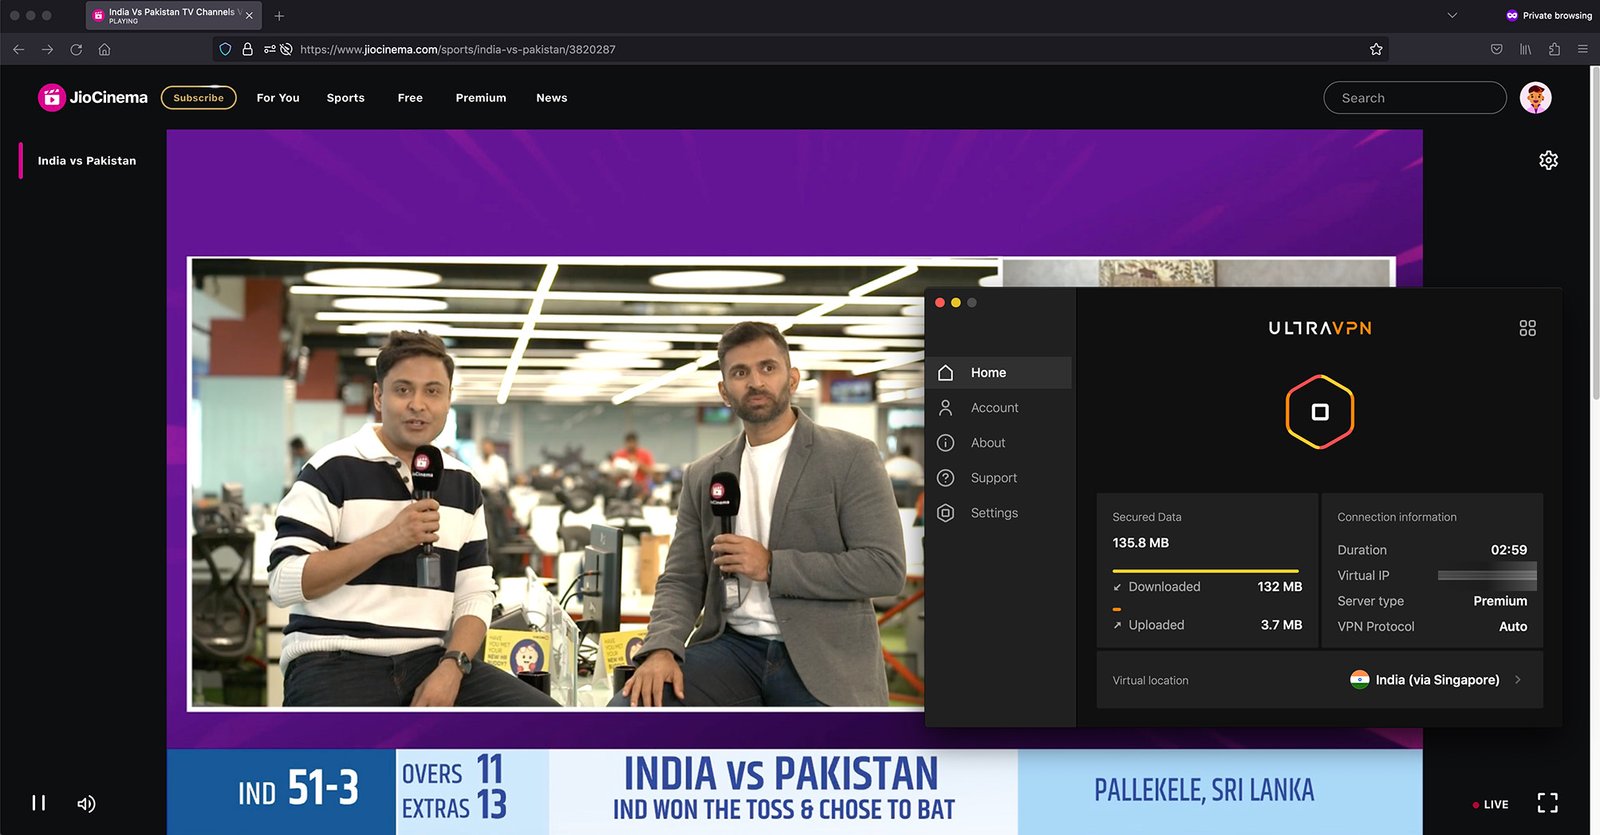 watch Jio Cinema outside India - Live streaming Jio Cinema Live Cricket Match abroad - with UltraVPN